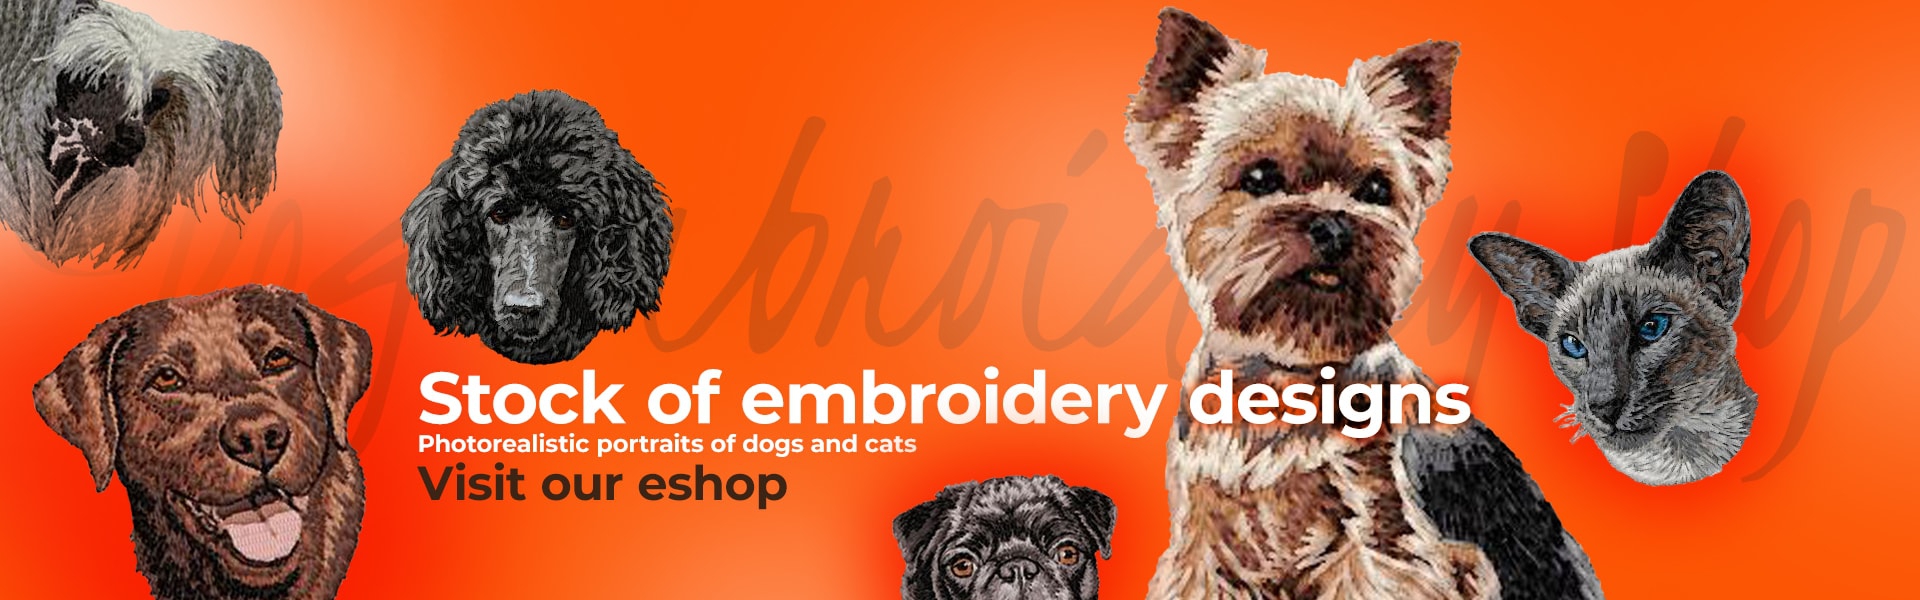 Dog Embroidery Shop Stock Of Embroidery Designs,Contemporary Parisian Interior Design